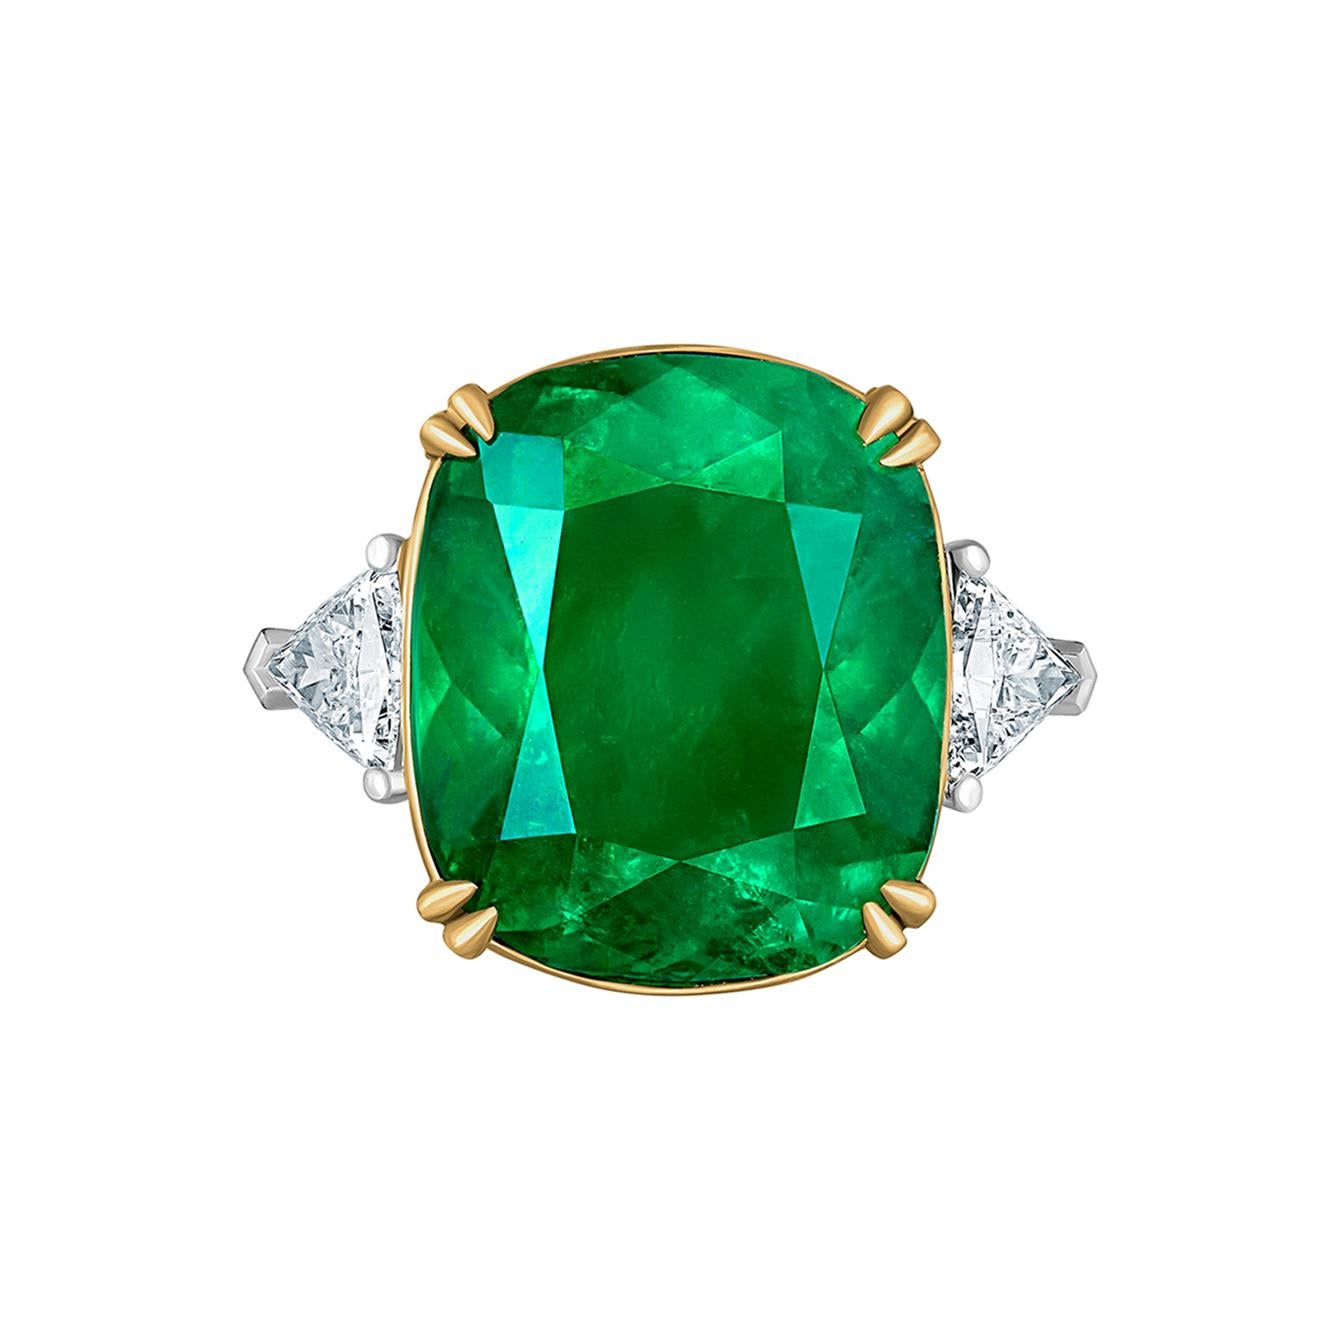 Emilio Jewelry Certified 15.96 Carat Colombian Vivid Green Emerald Diamond Ring